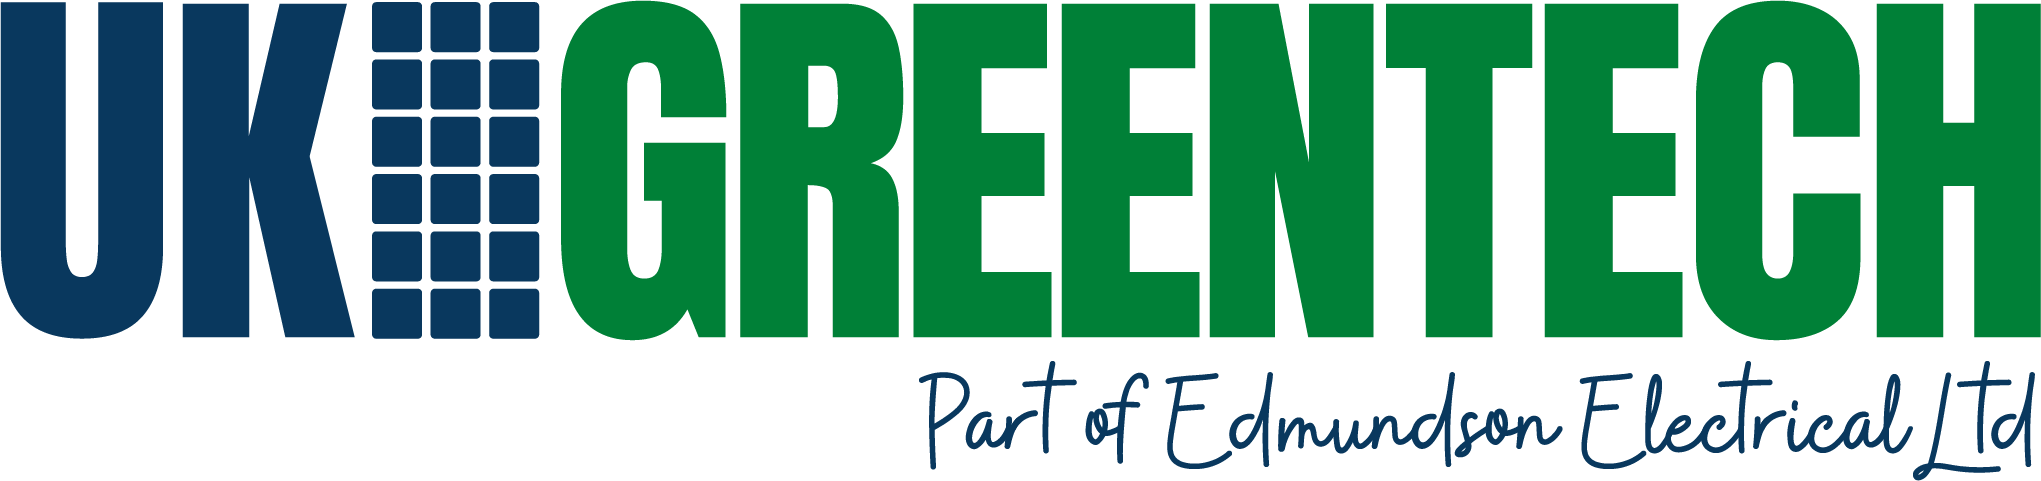 UK GreenTech Logo